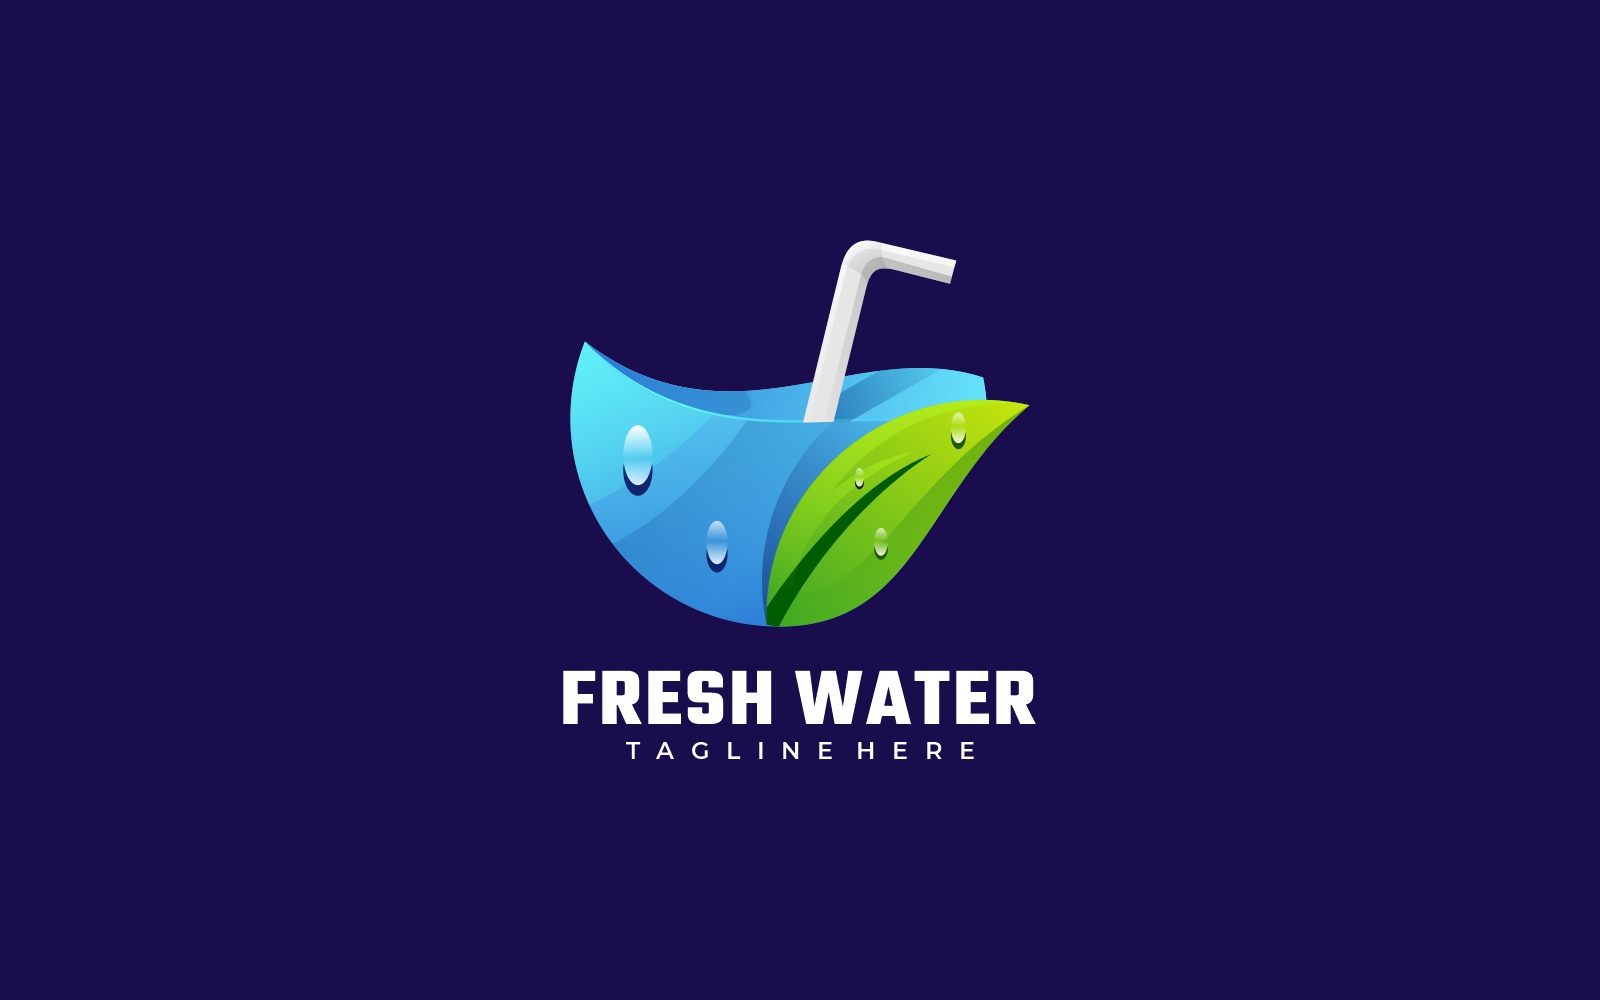 Fresh Water Gradient Logo